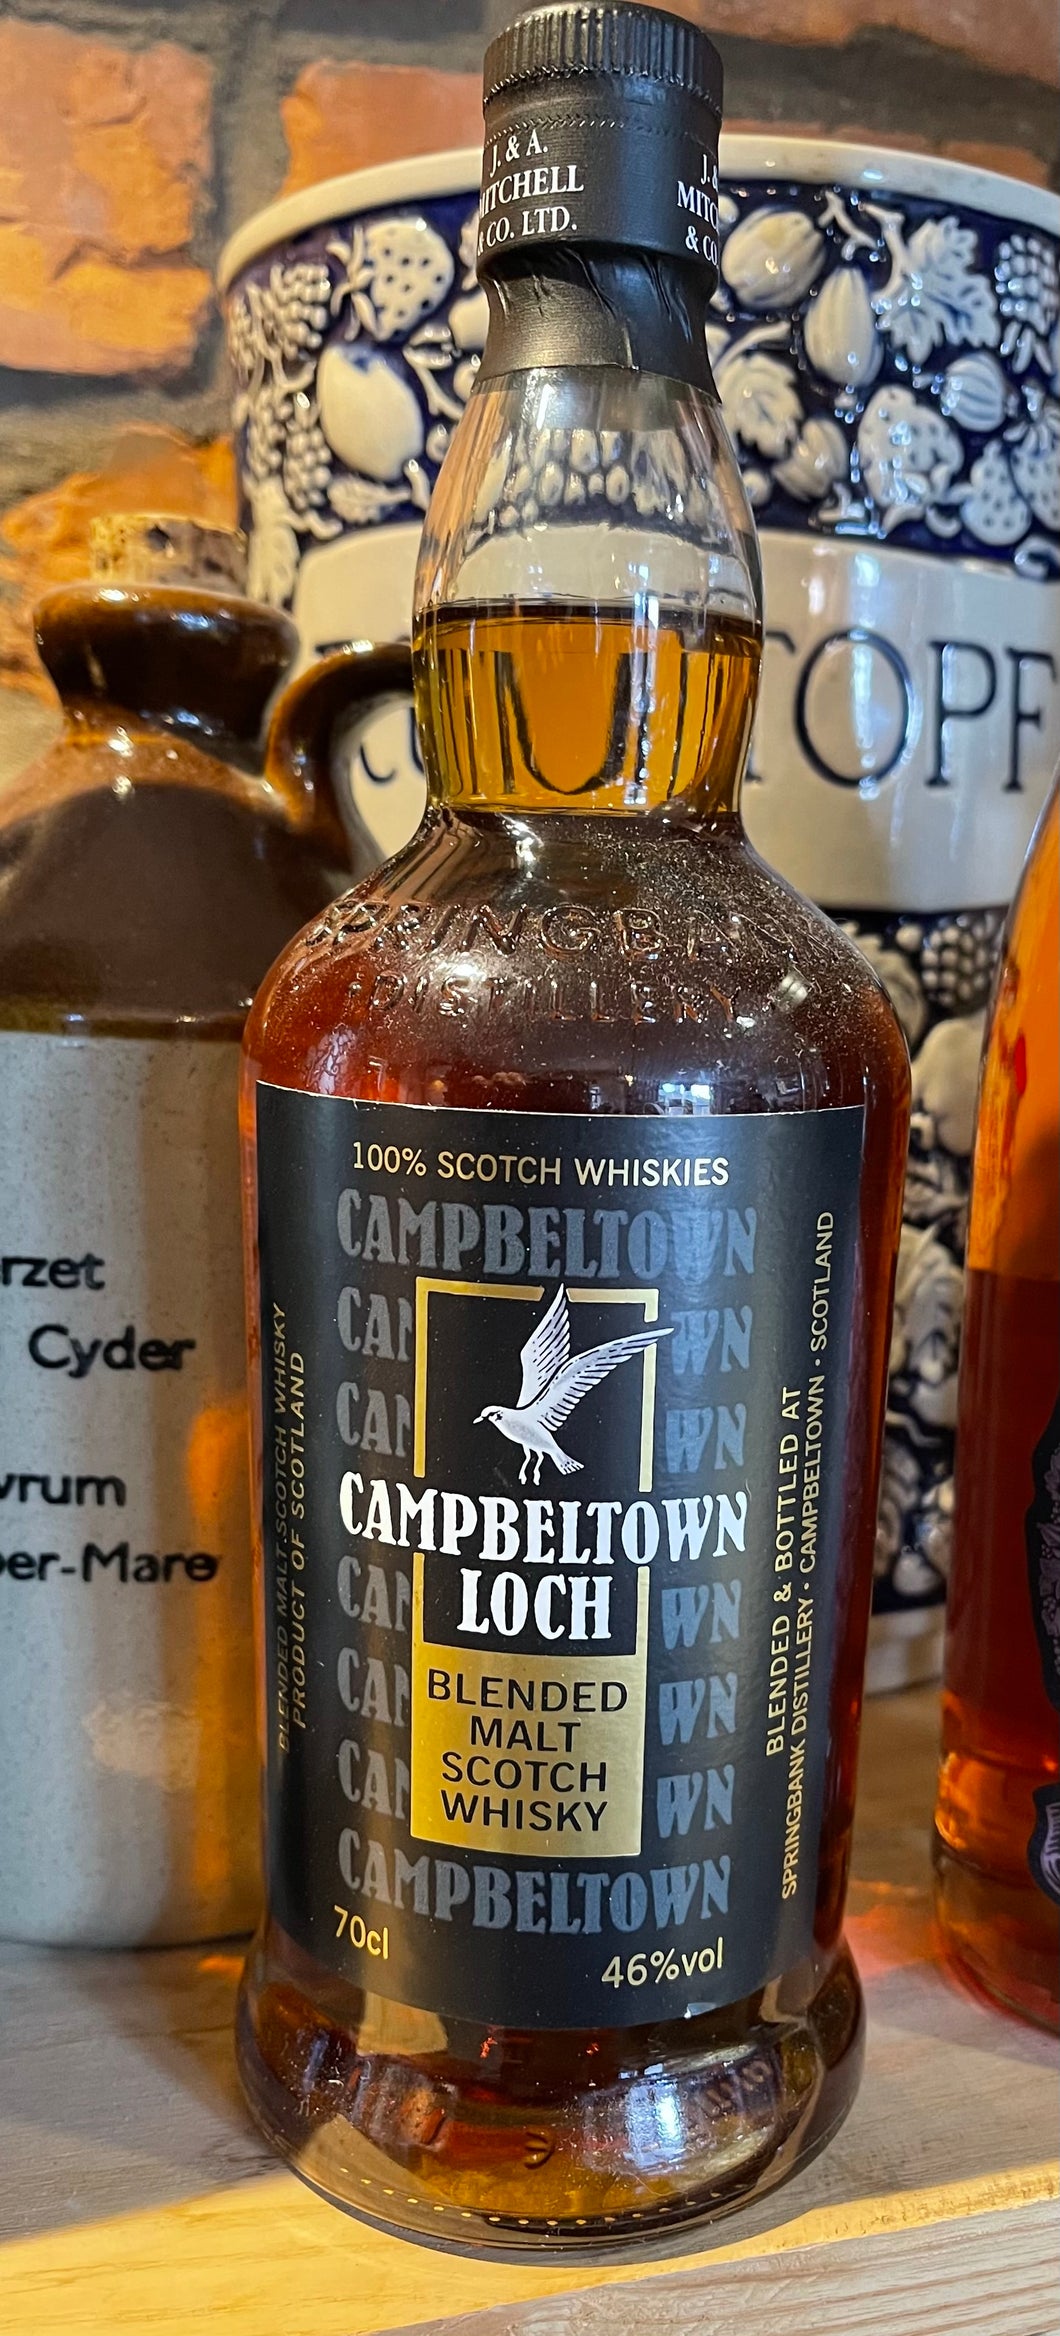 Campbeltown Loch Blended Malt Scotch Whisky 700ml 46%